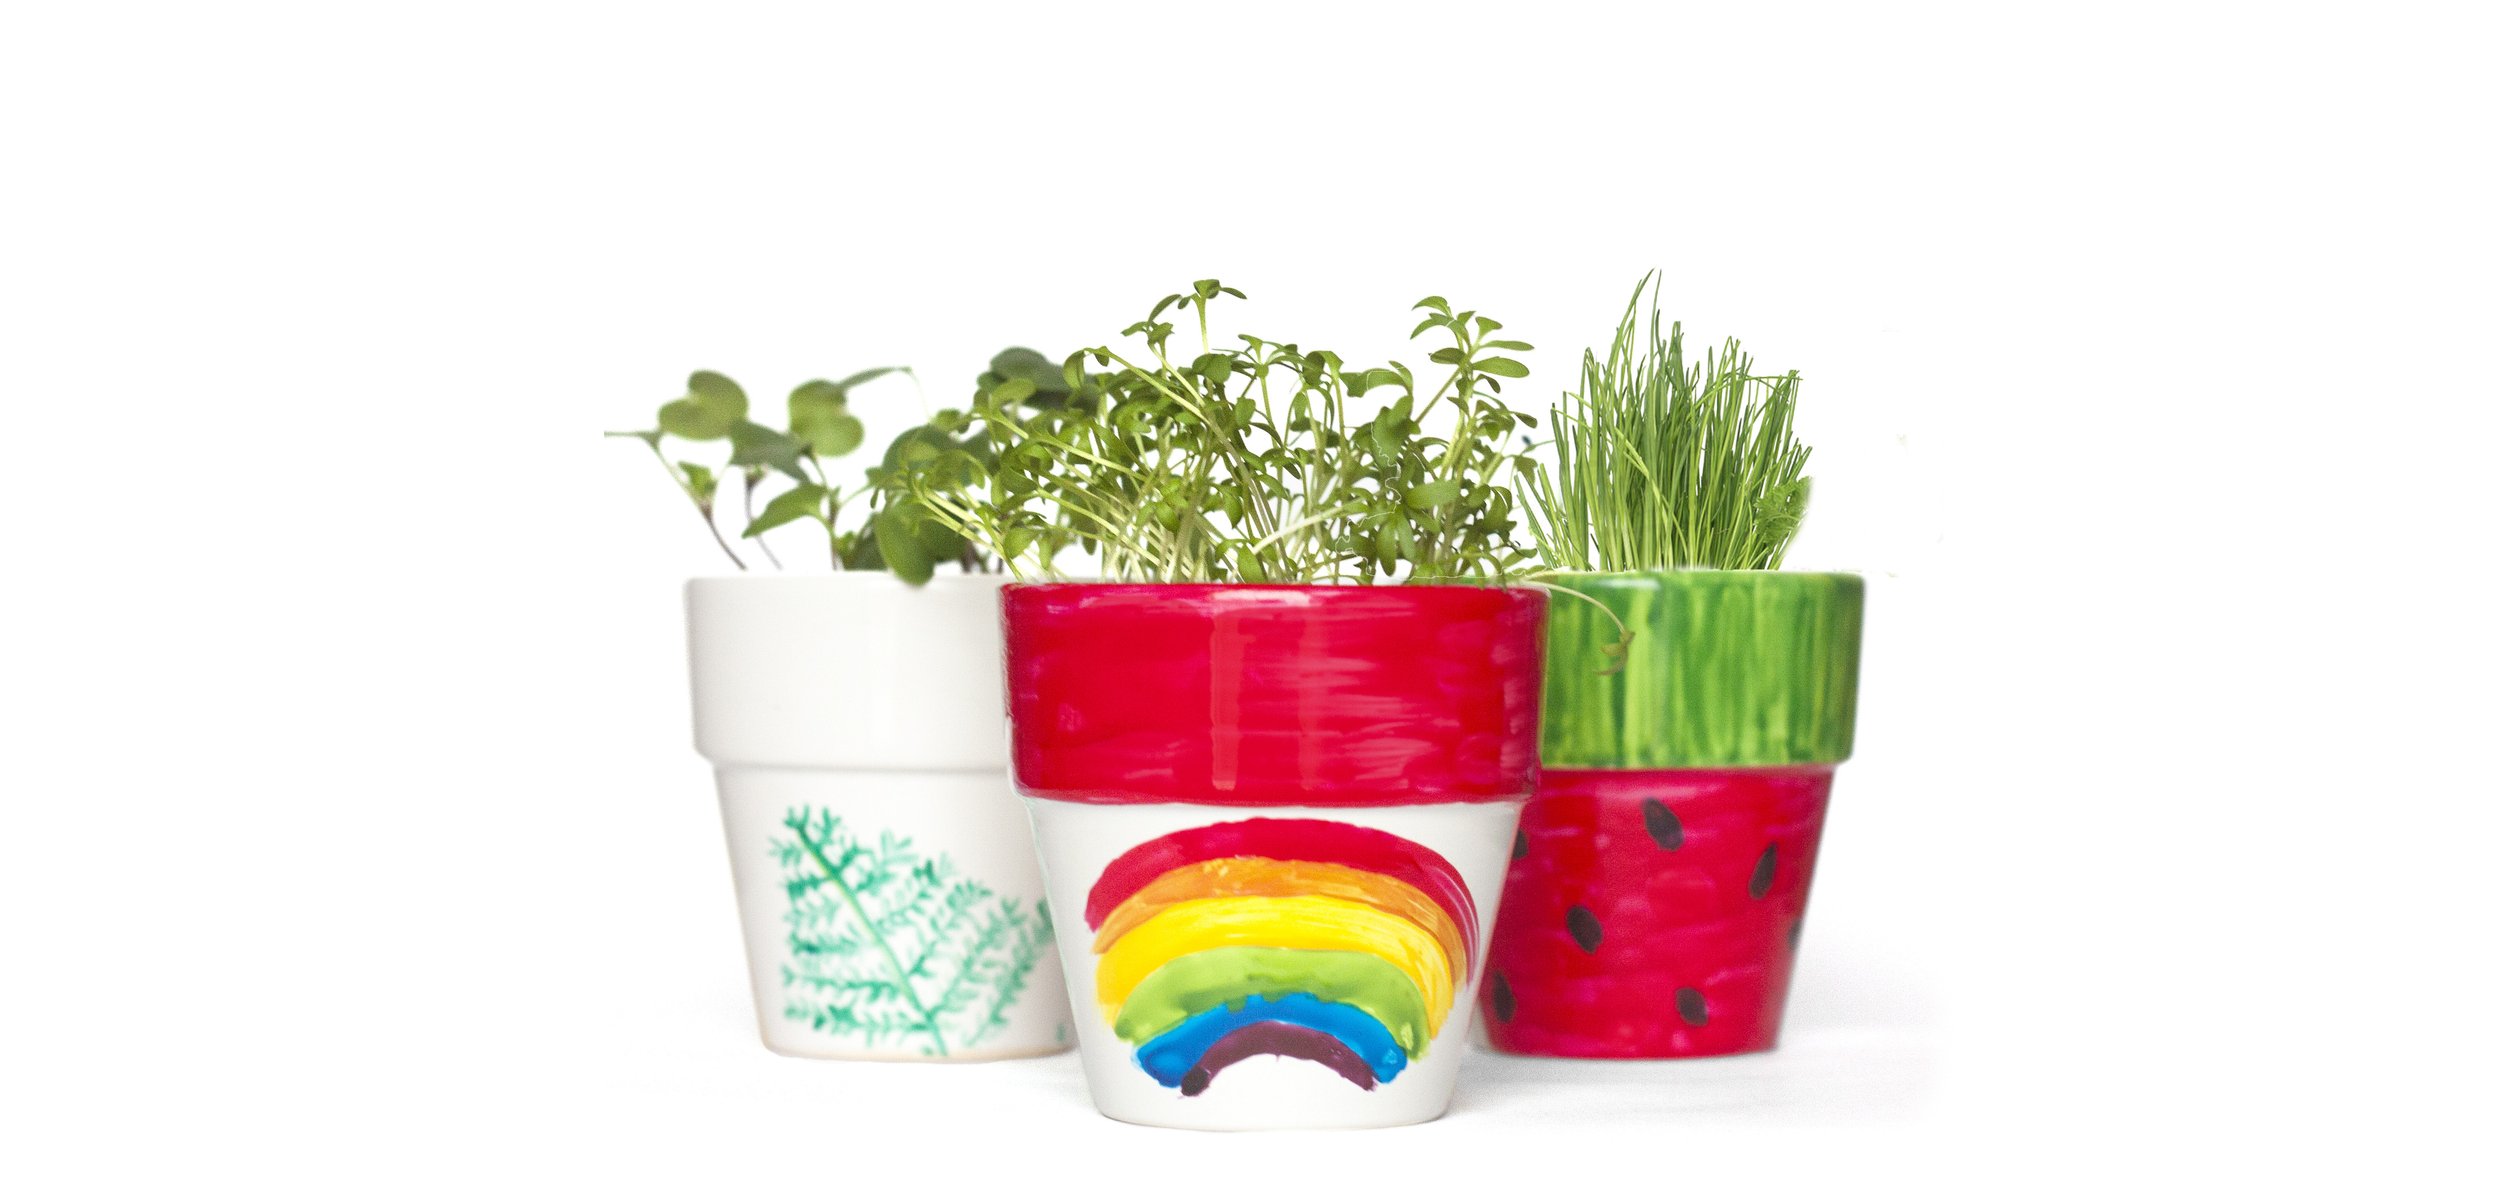 Plant Pot Window Sill garden Kit urban.jpg